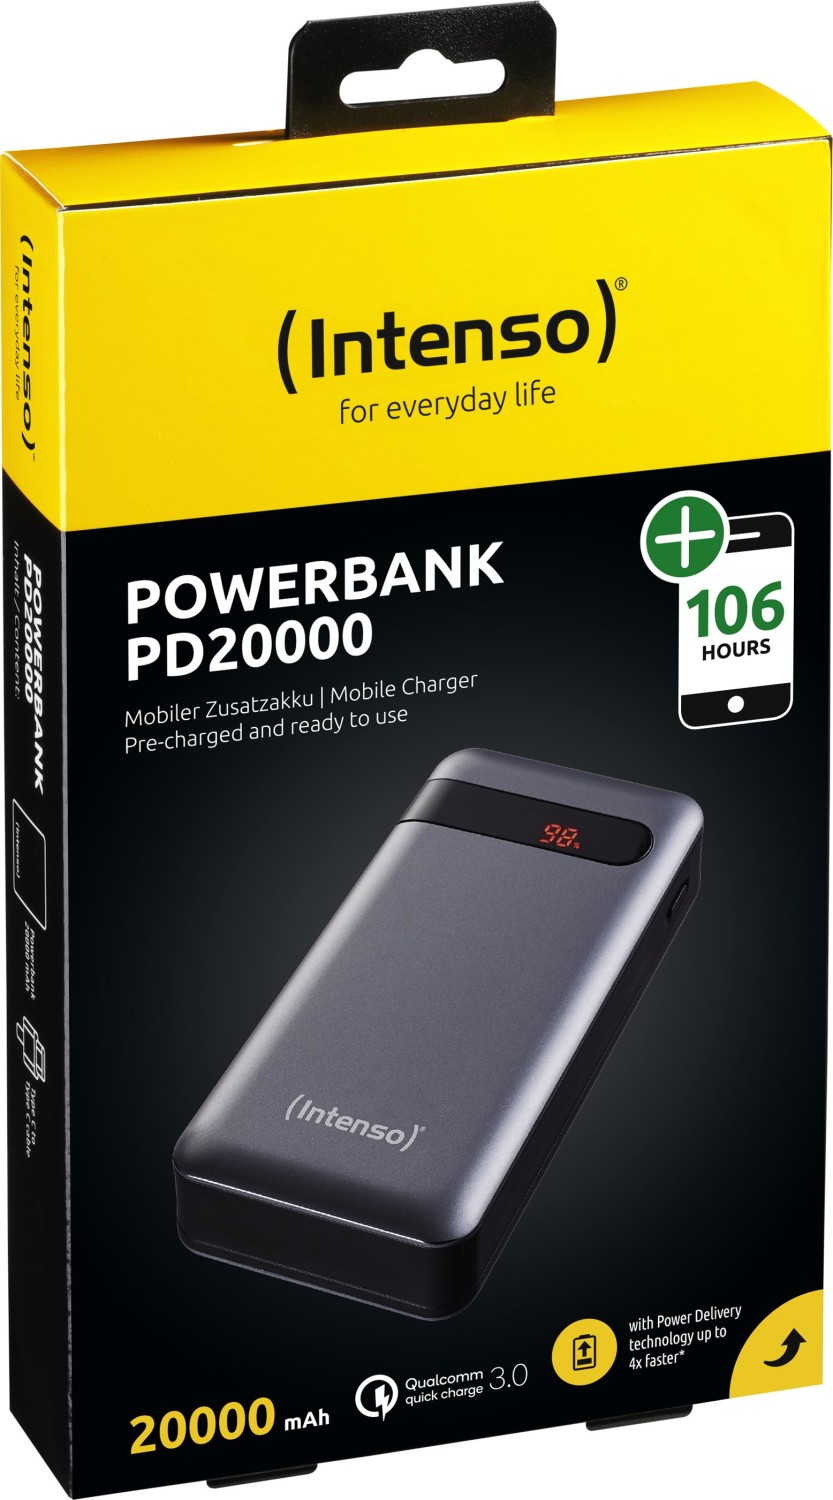 Intenso Powerbank PD 20000 schwarz, 20.000mAh